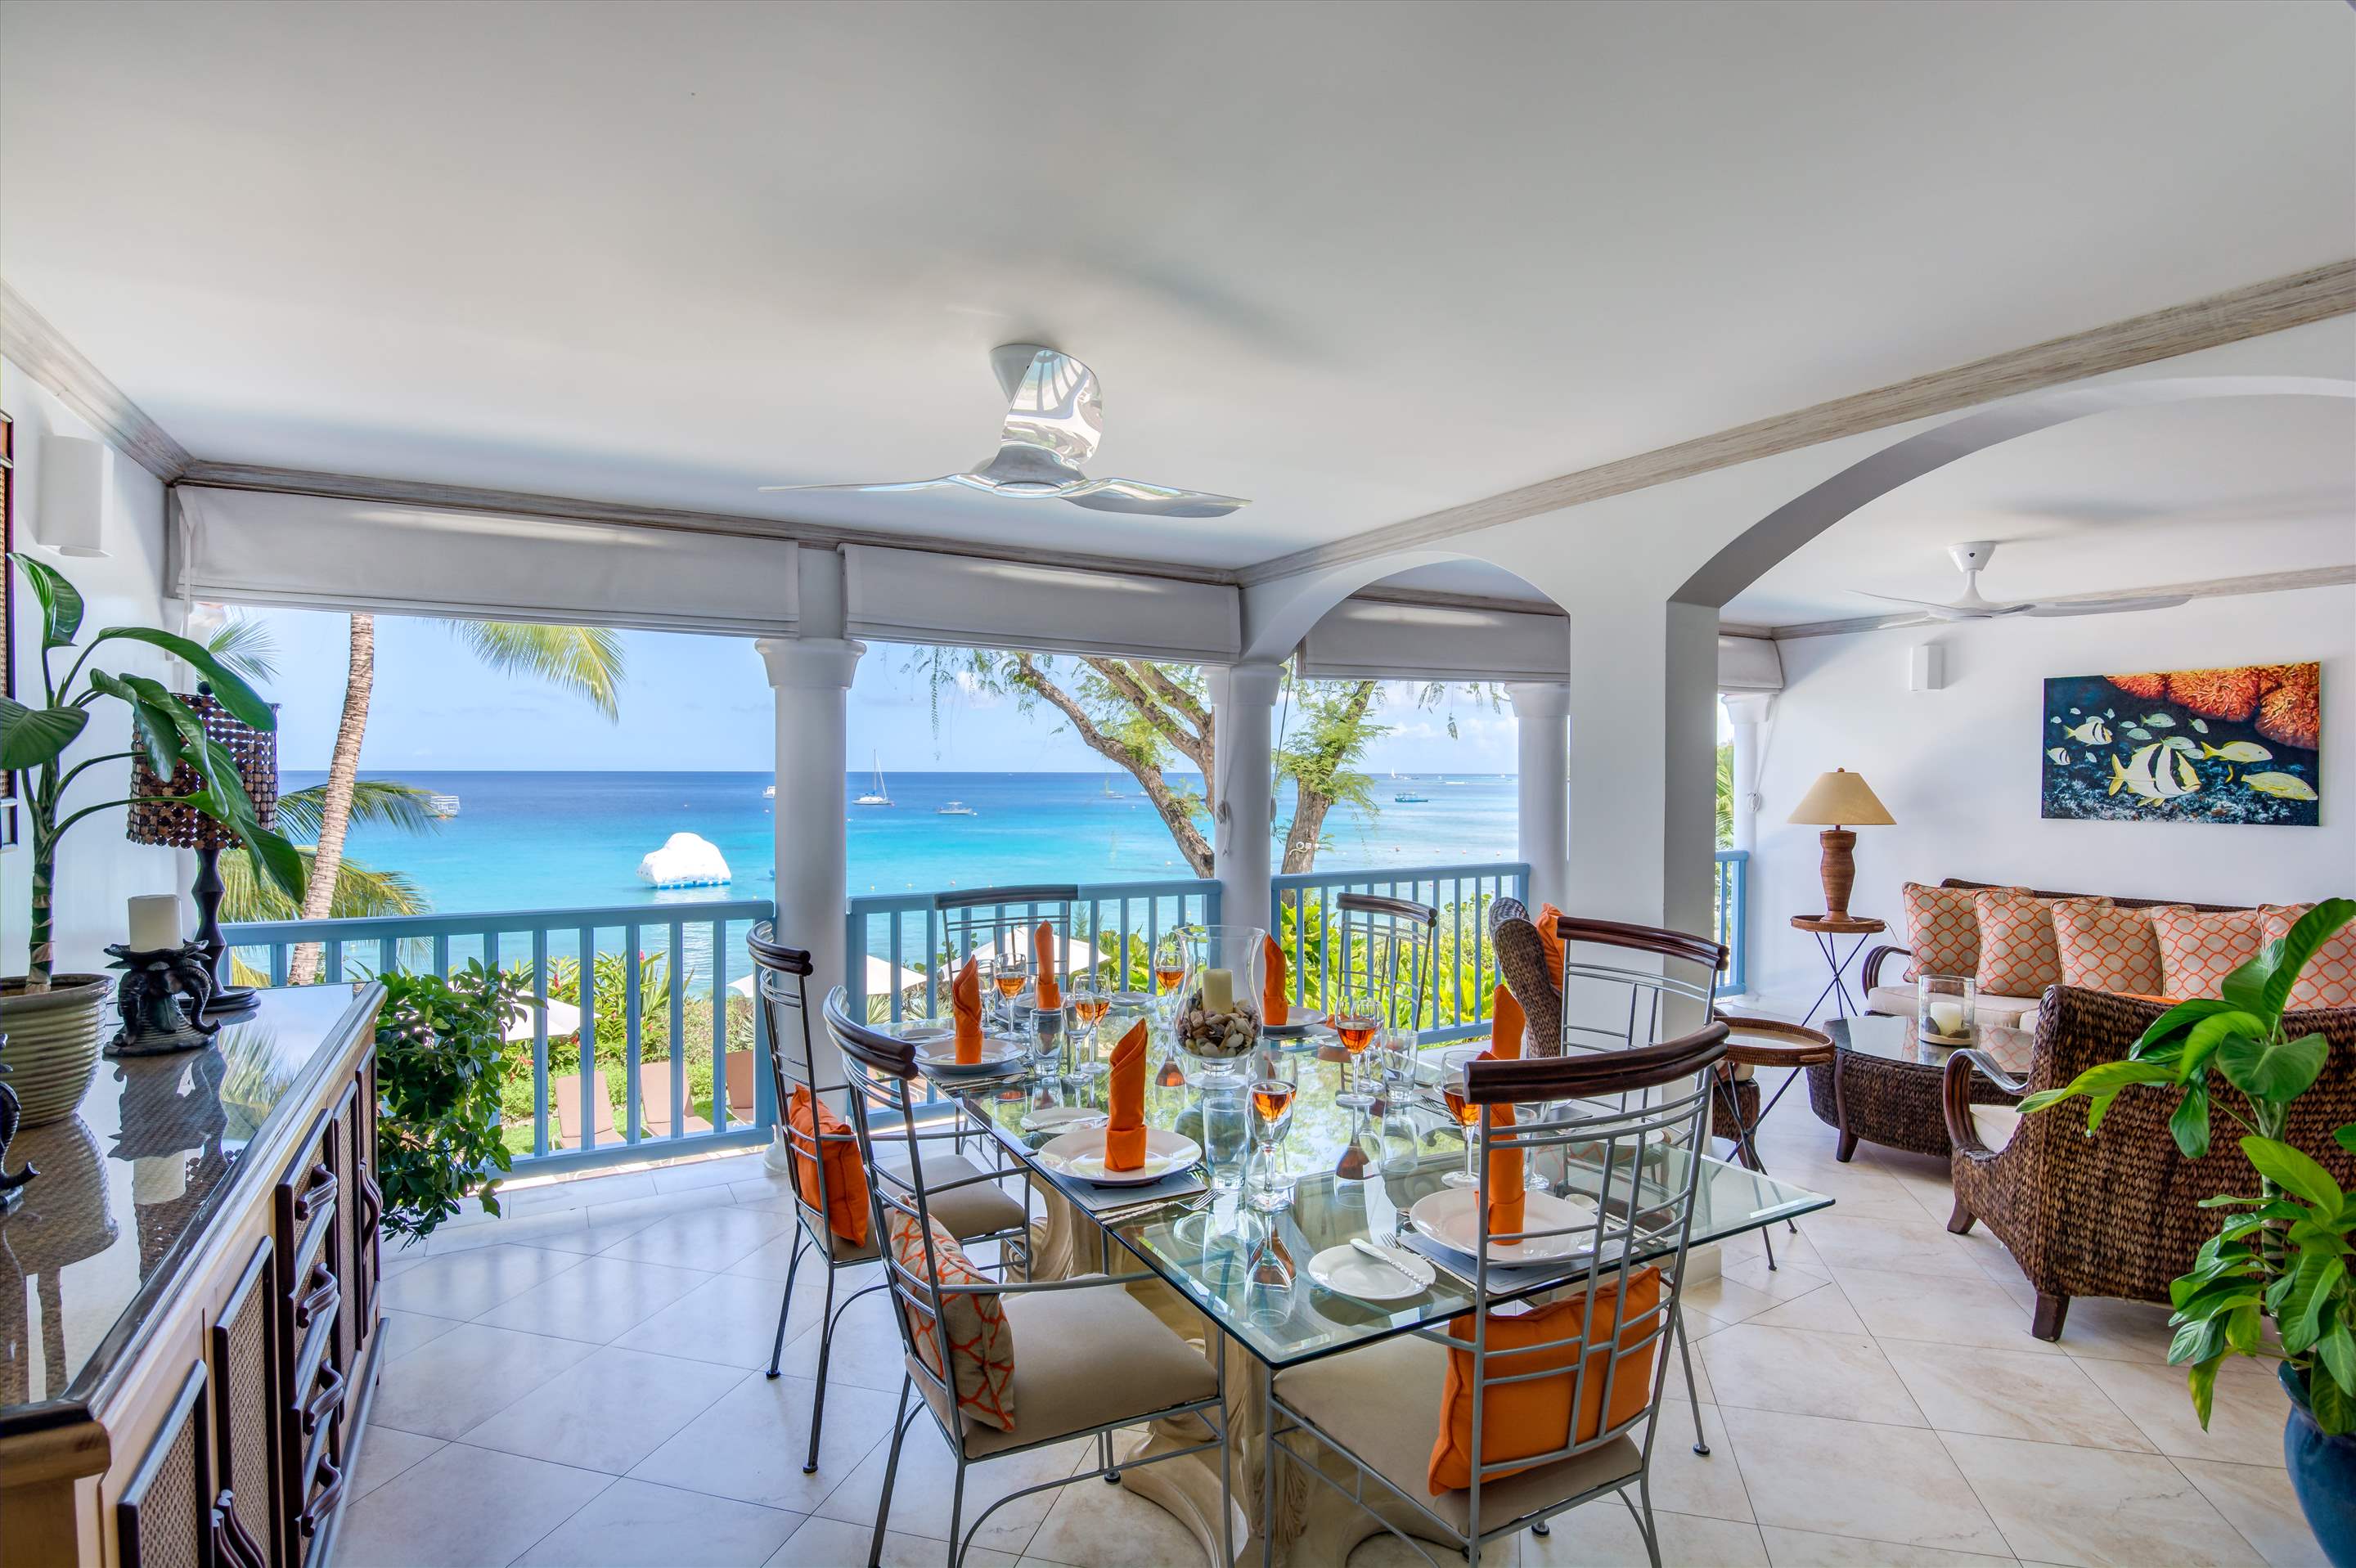 Villas on the Beach 201 , 3 bedroom, 3 bedroom apartment in St. James & West Coast, Barbados Photo #4